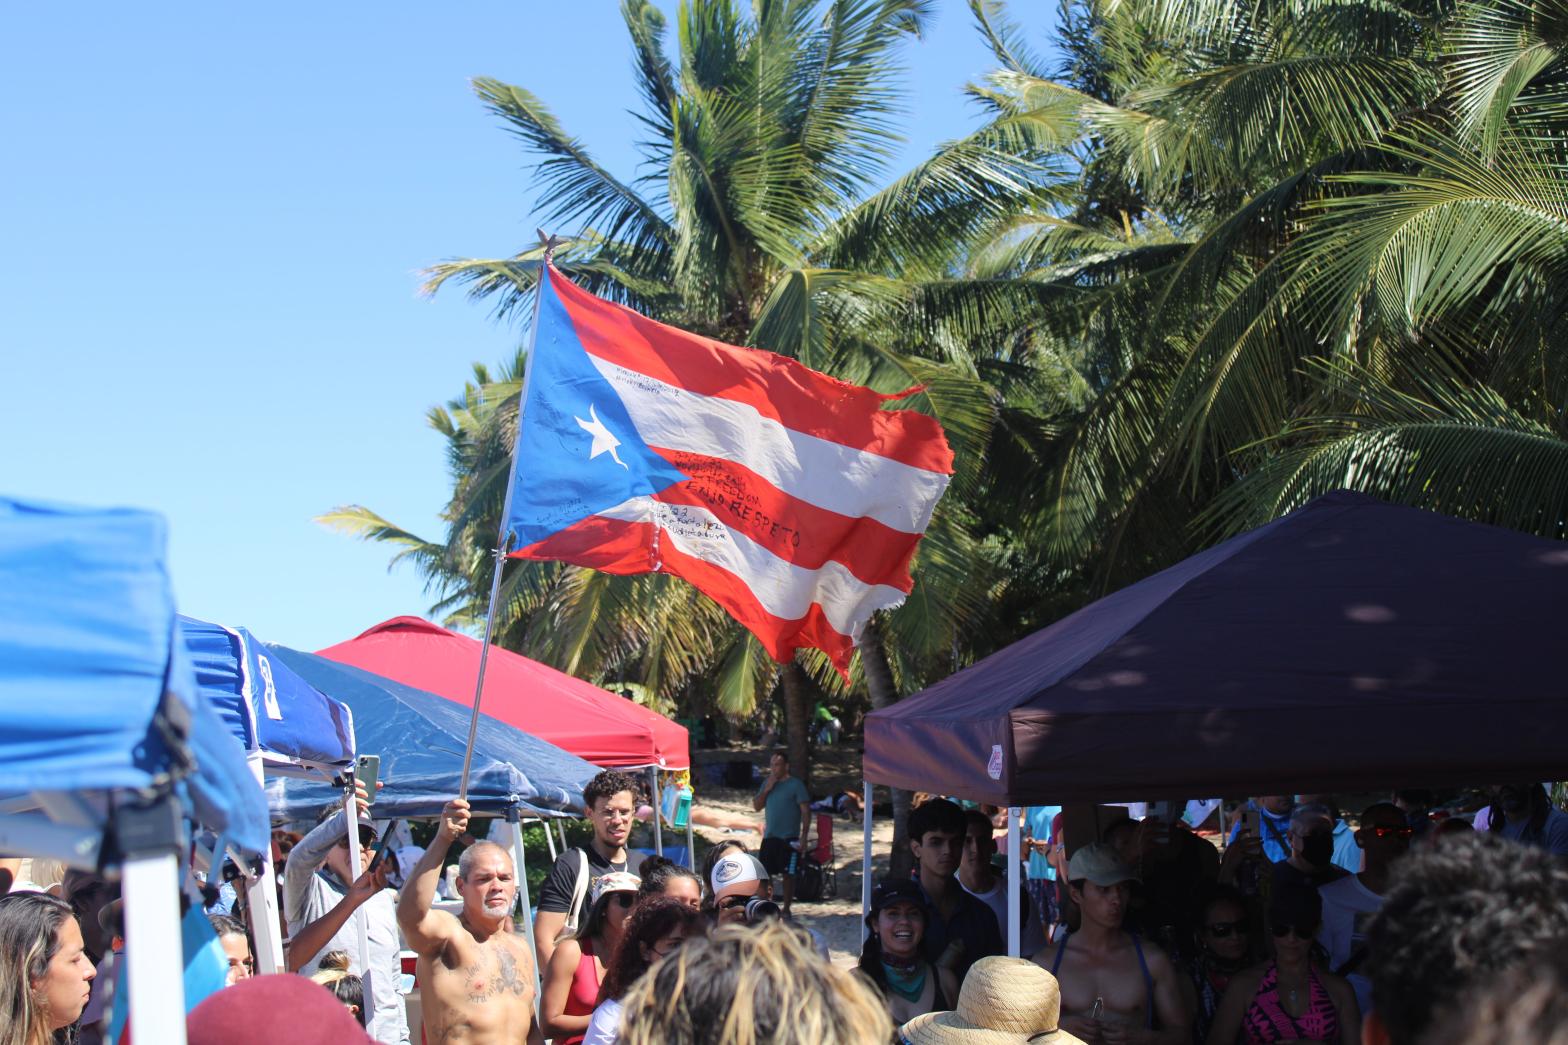 Locals at a beach in Ocean Park, Puerto Rico in January 2022 (Photo: Carlos Berríos Polanco)